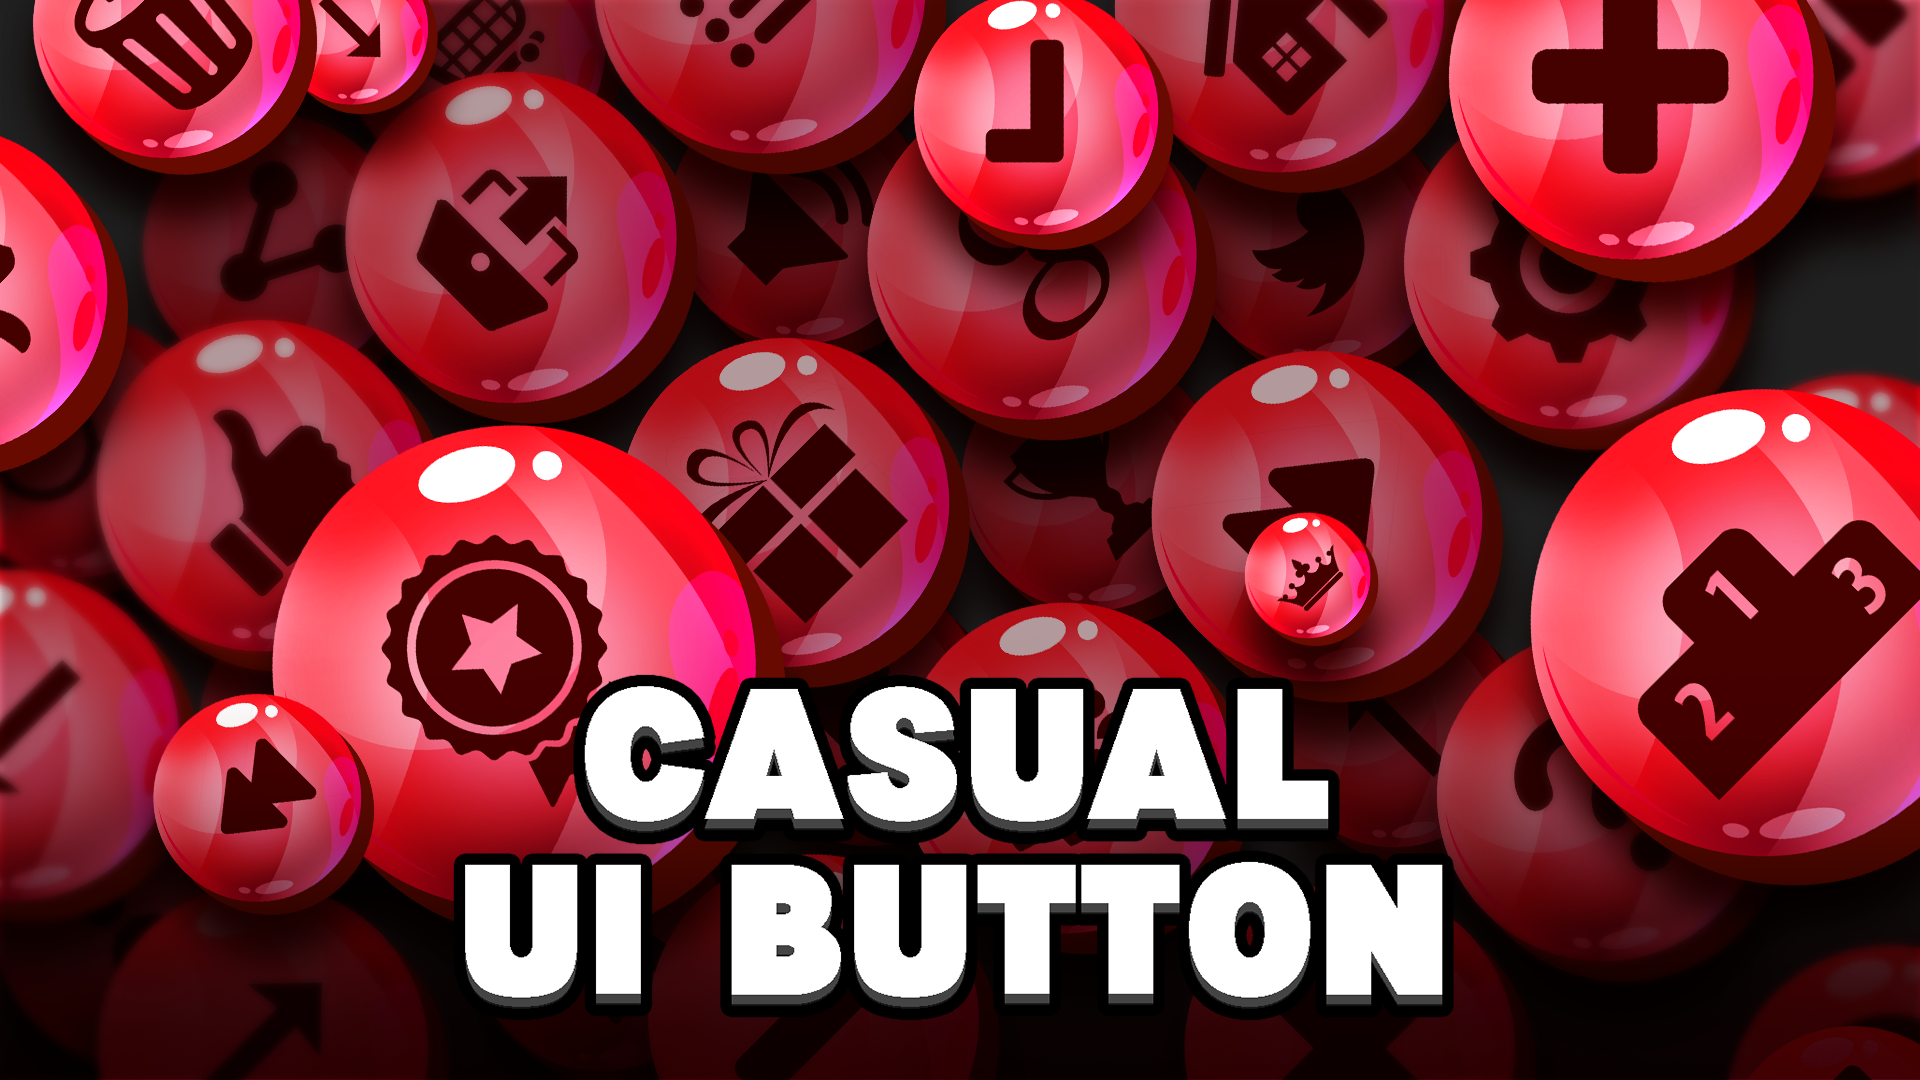 Casual UI Button #7